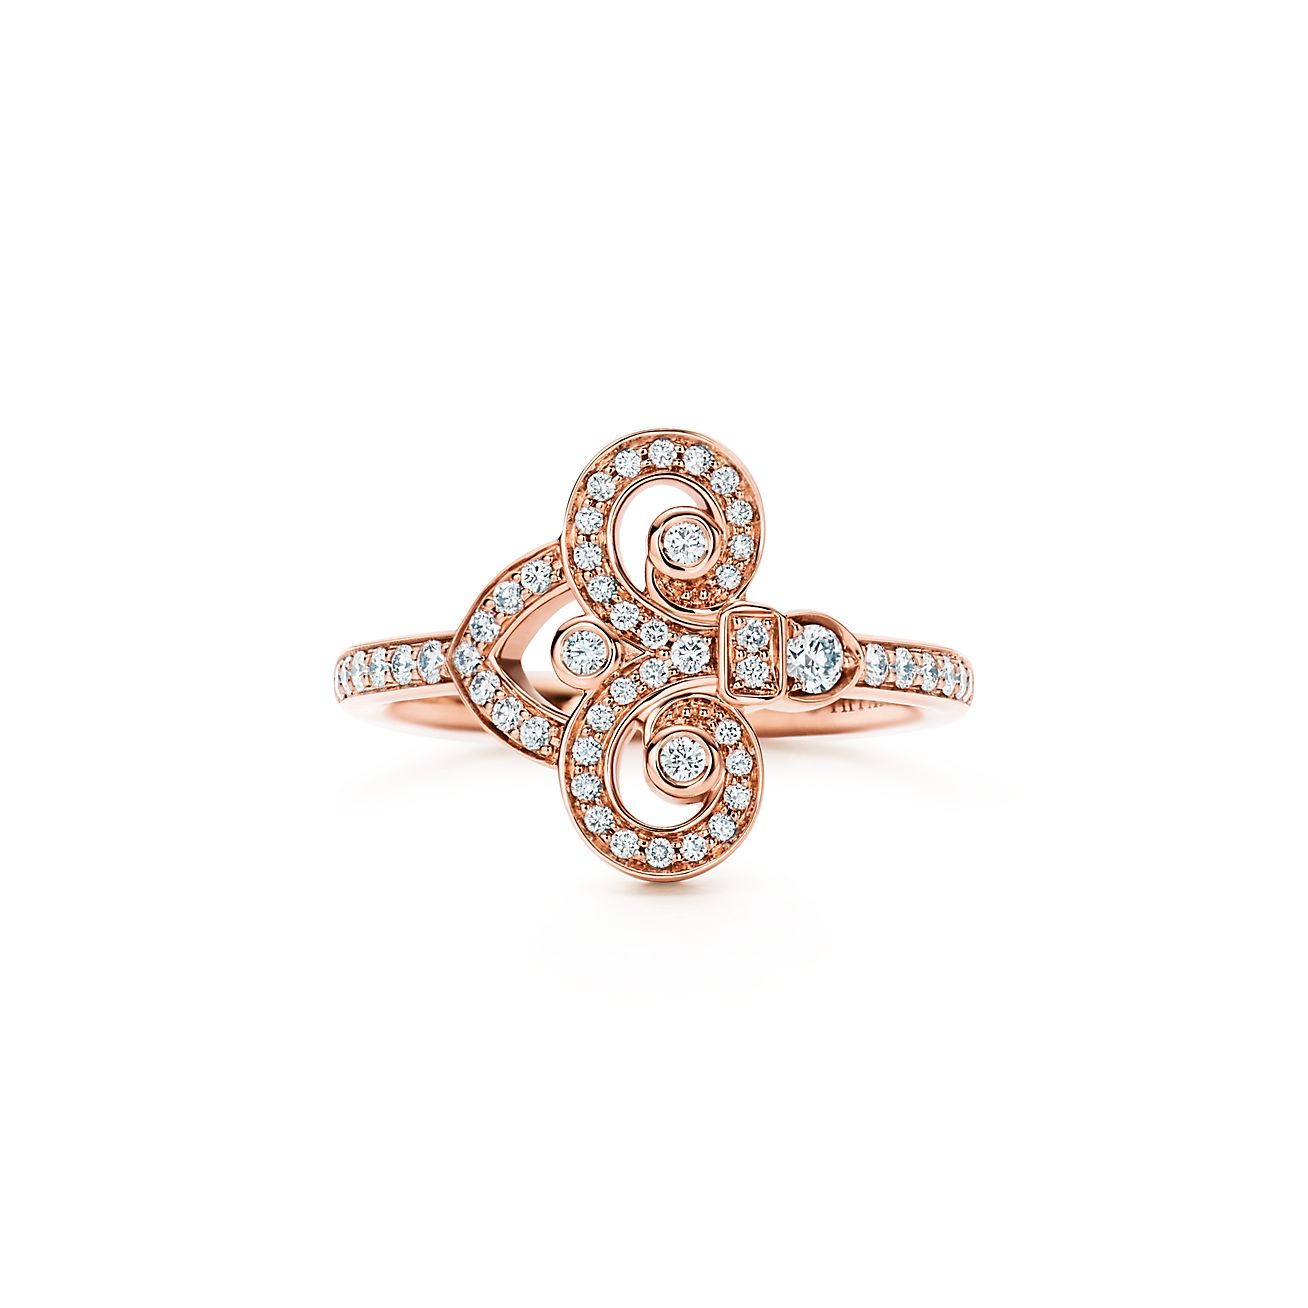 Tiffany Fleur de Lis ring in 18k rose gold with diamonds 